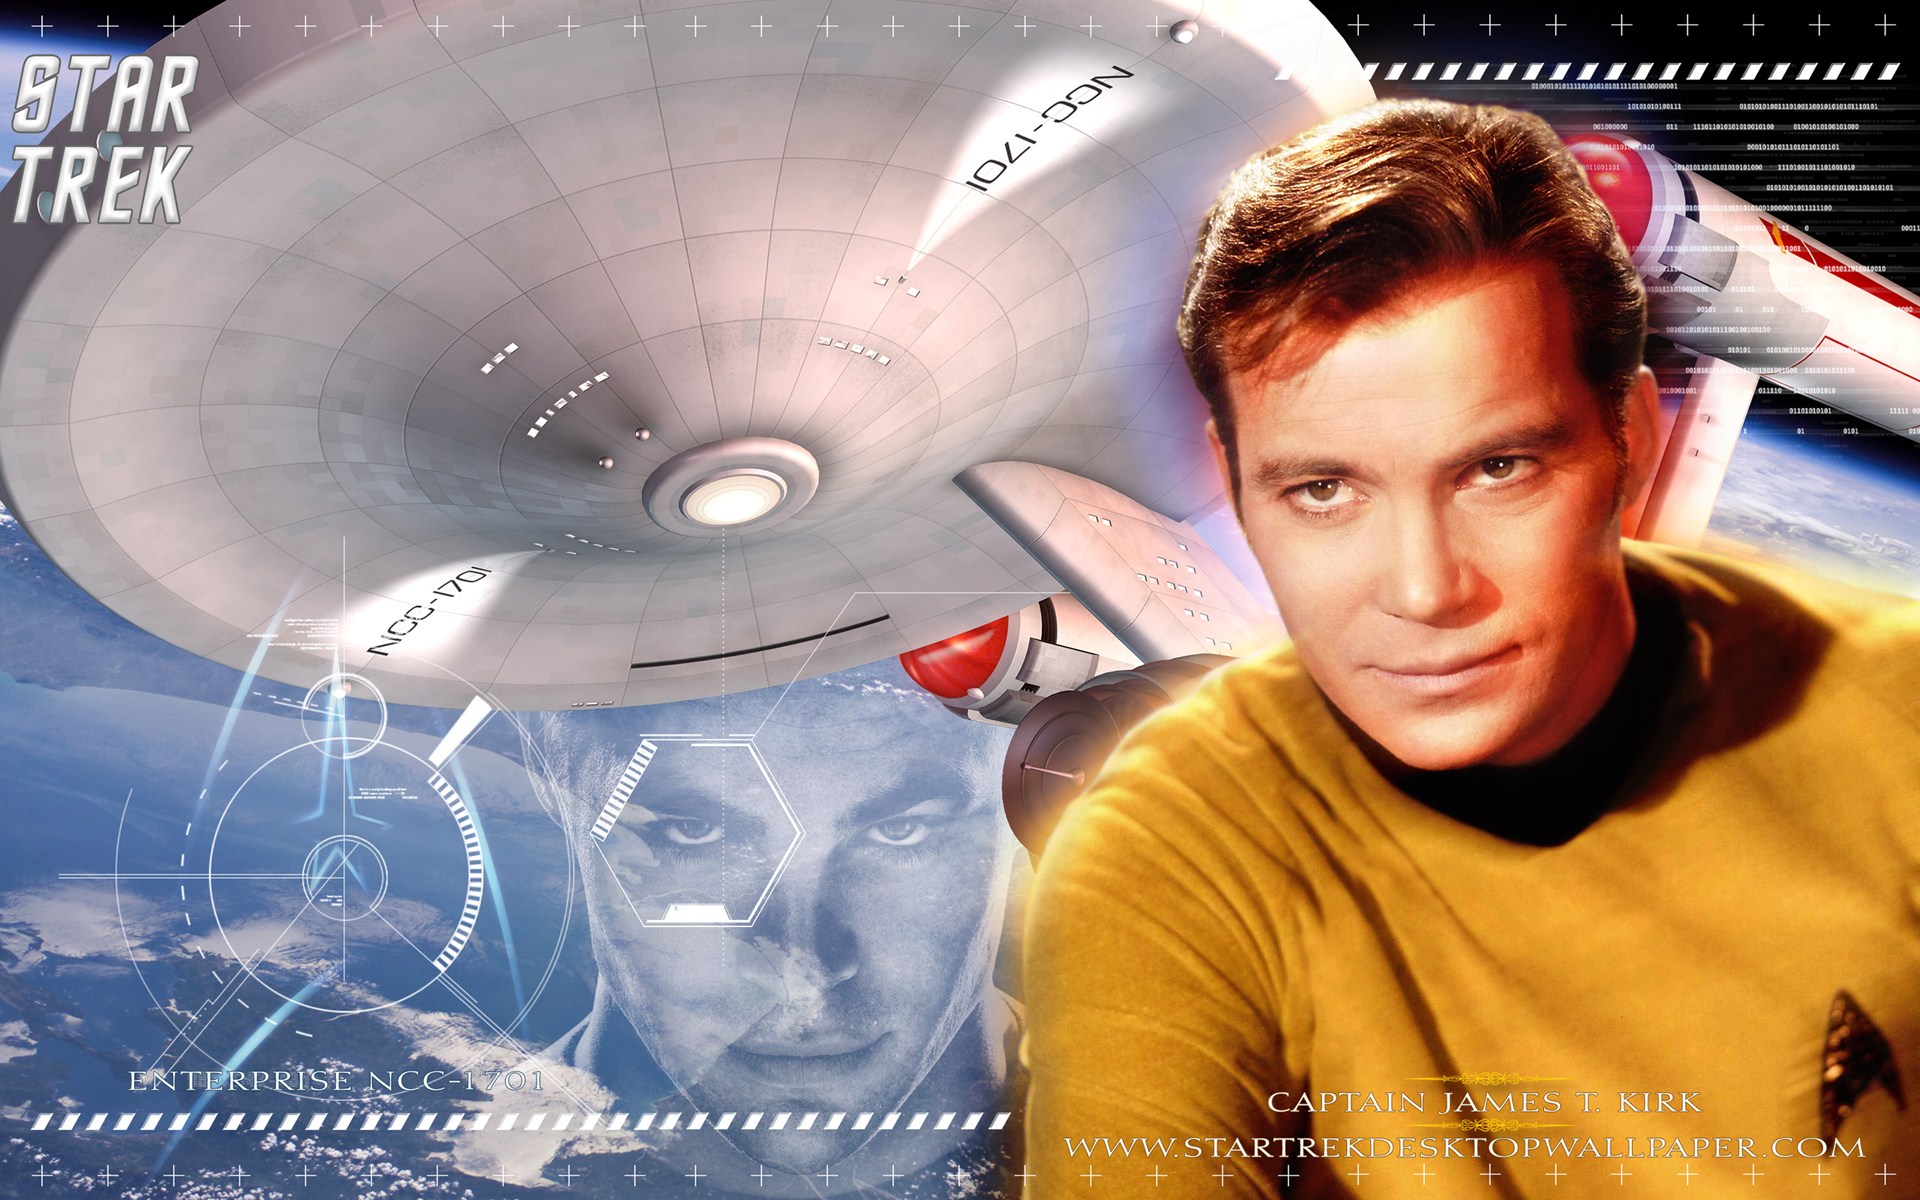 - Star Trek Original Series Captain James T.Kirk - free Star Trek computer desktop wallpaper, pictures, images.